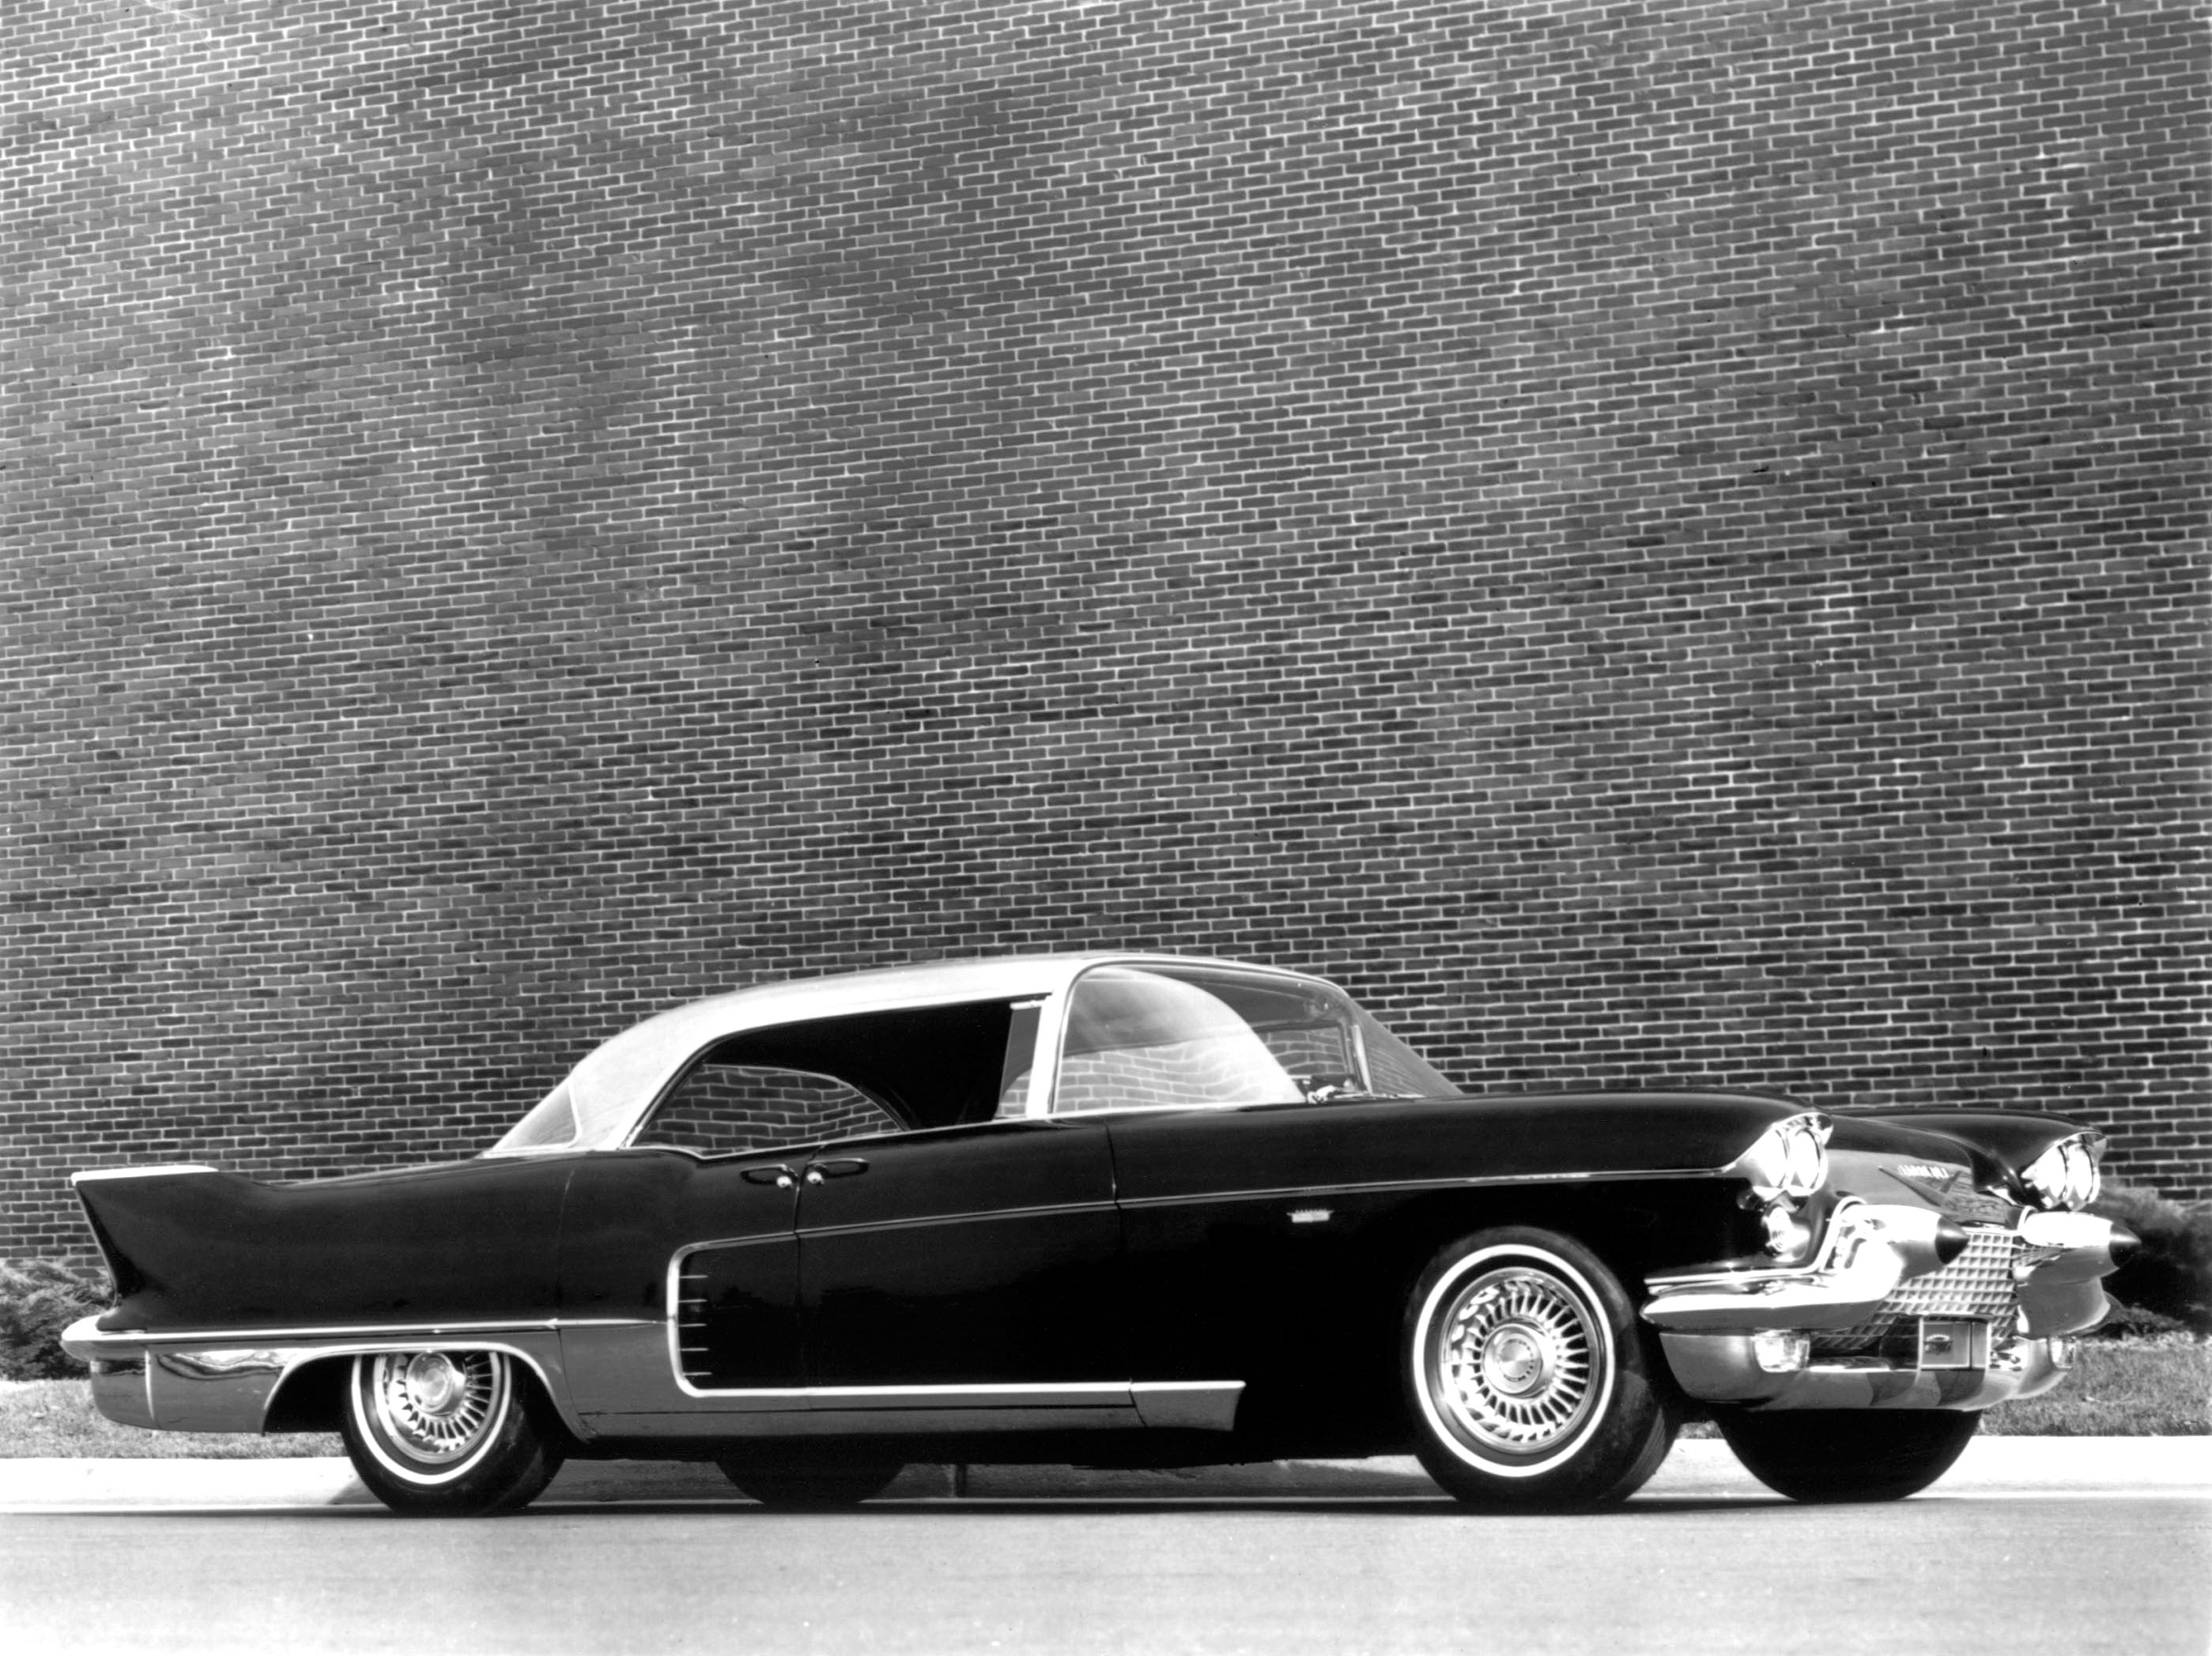 1957 Cadillac Factory Photos Page 3